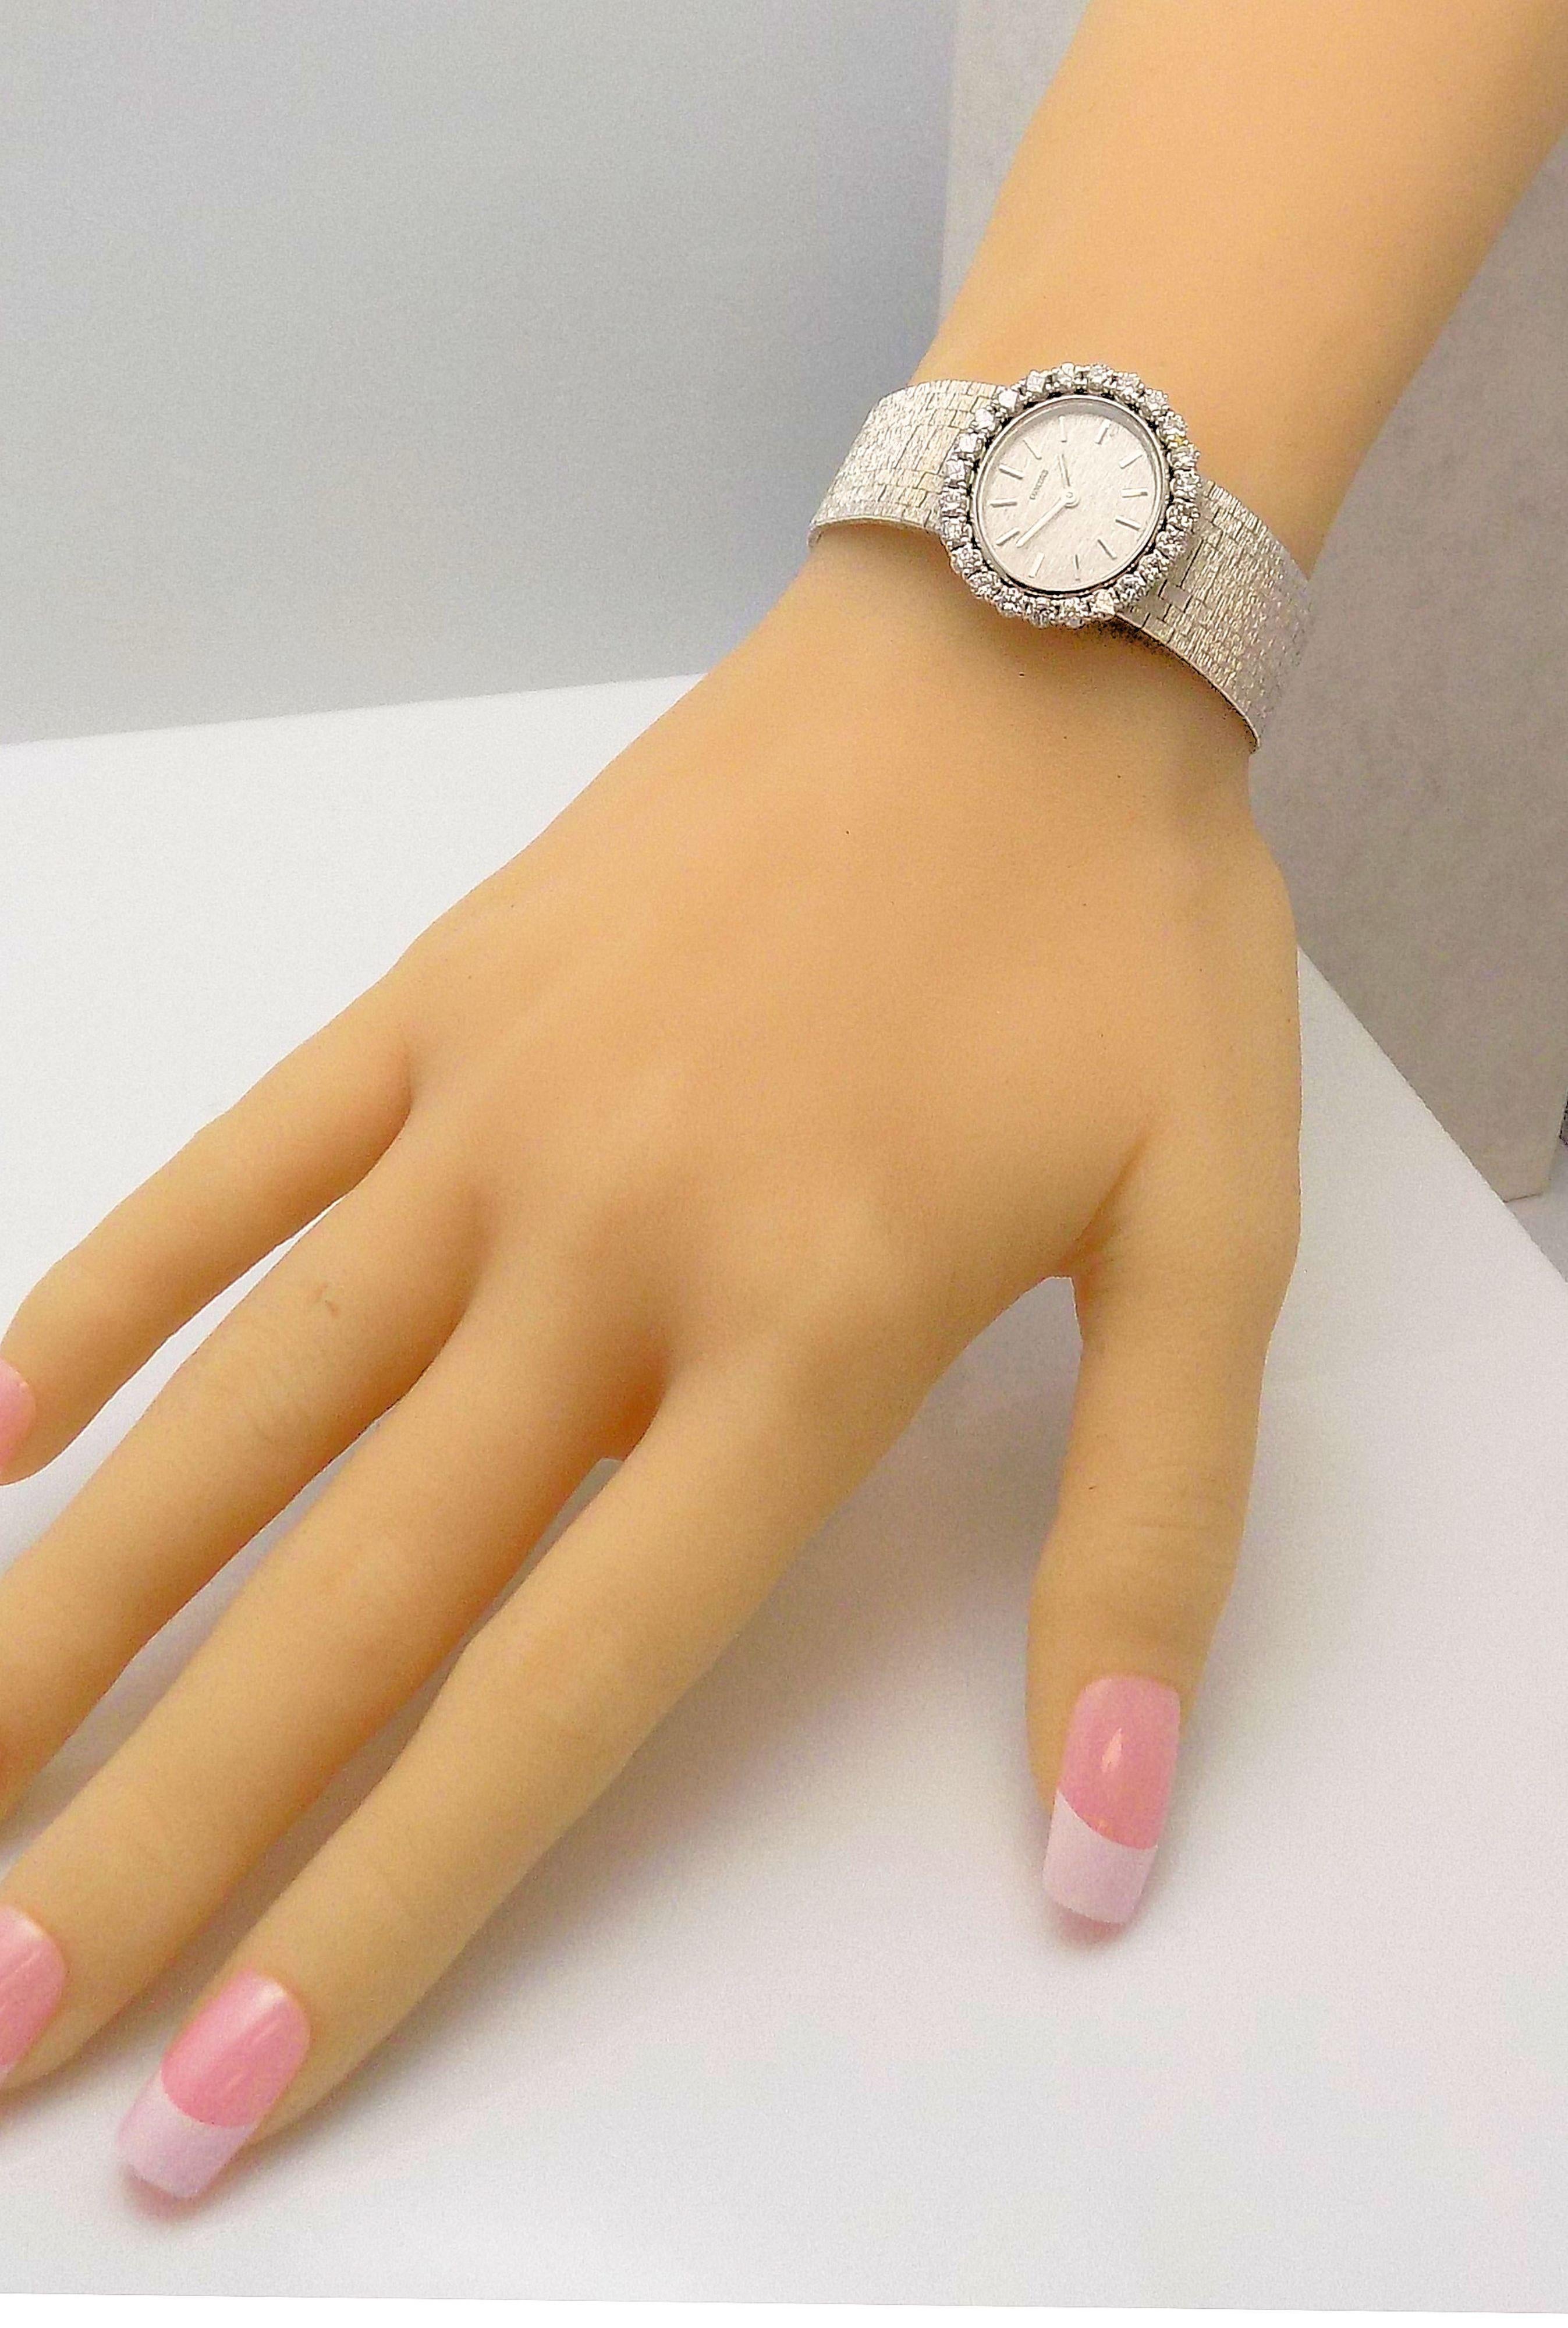 Round Cut Concord Ladies White Gold Diamond Wristwatch For Sale